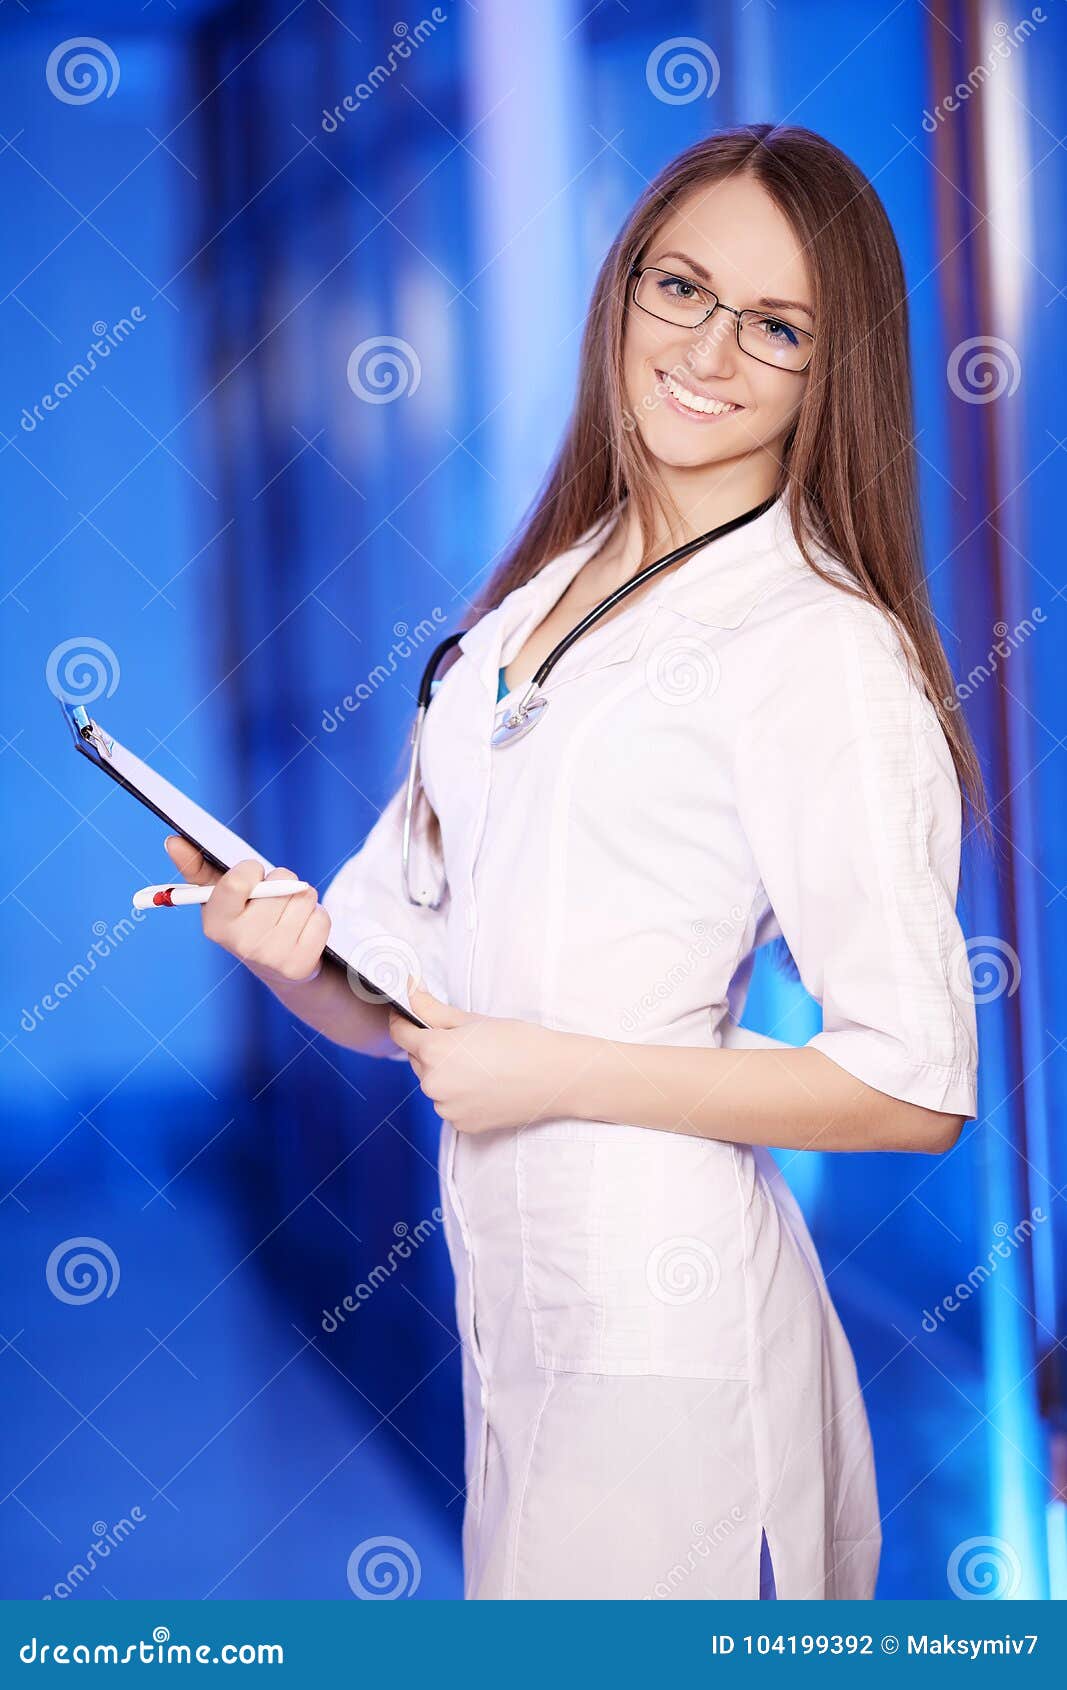 Fuck beautiful girl doctors